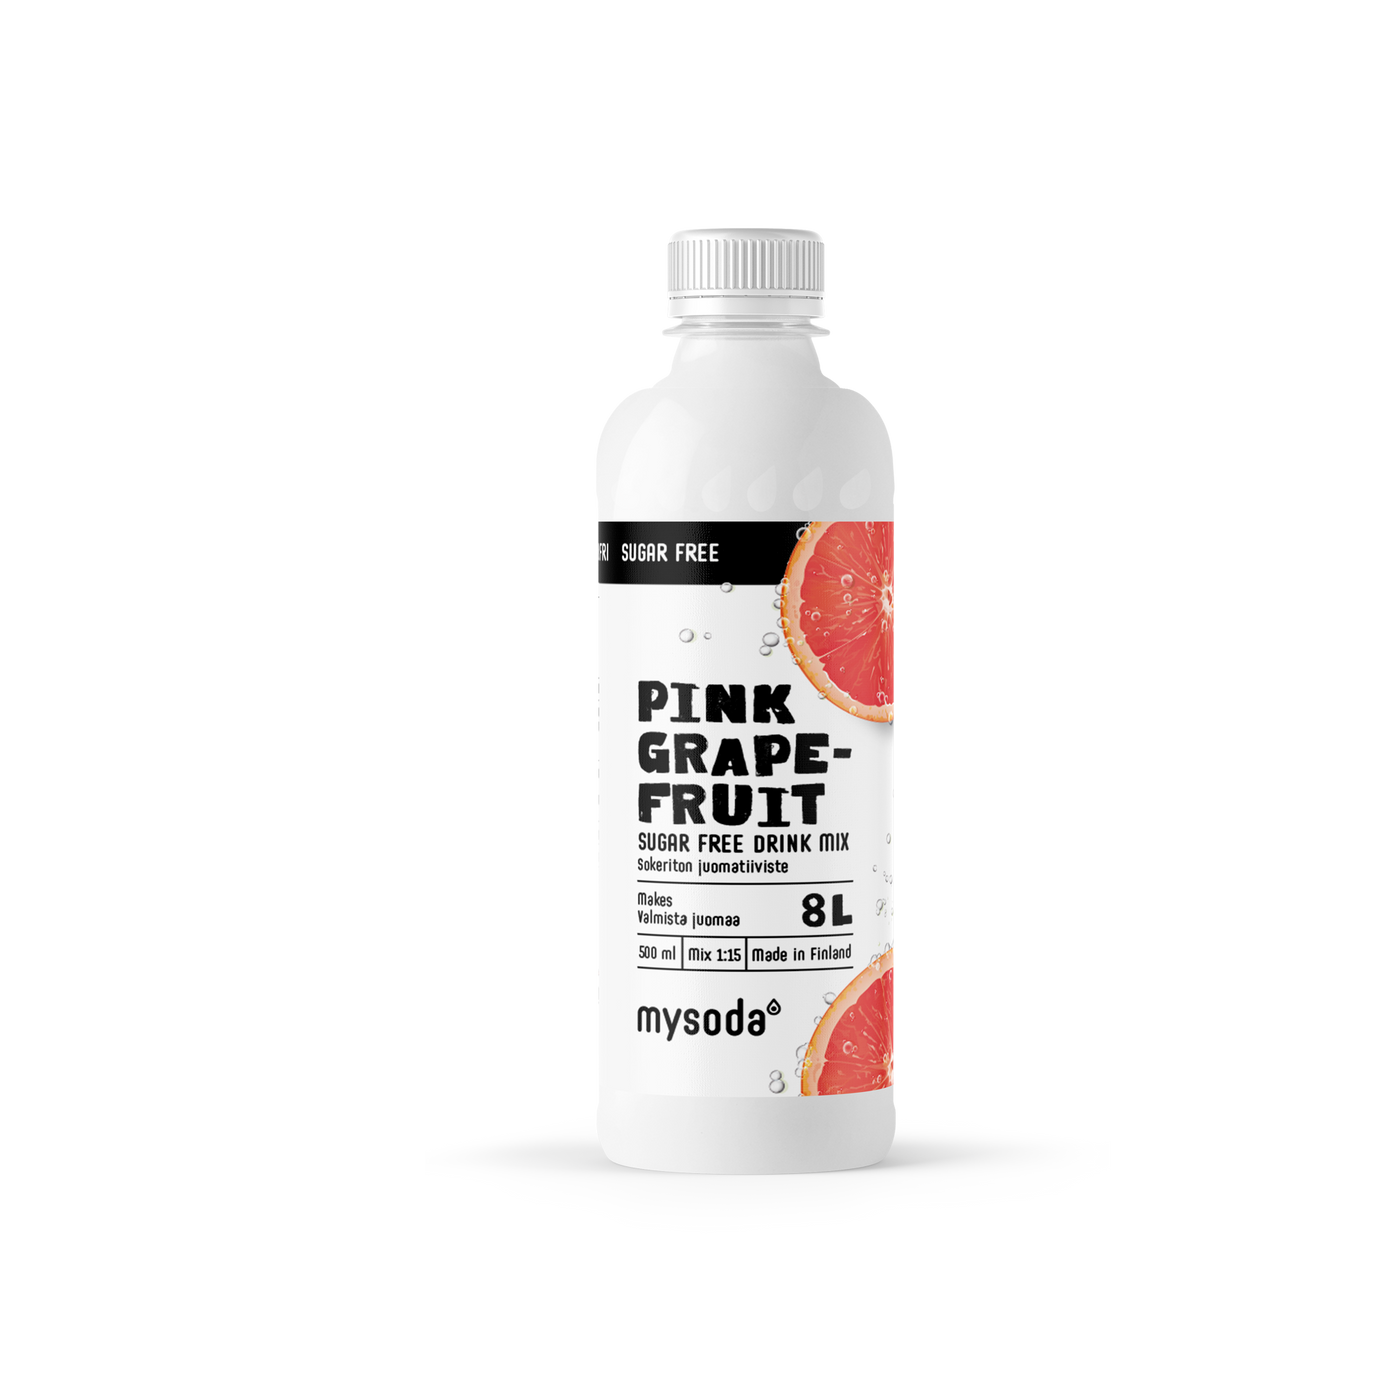 A bottle of sugarfree Mysoda drink mix pink-grapefruit